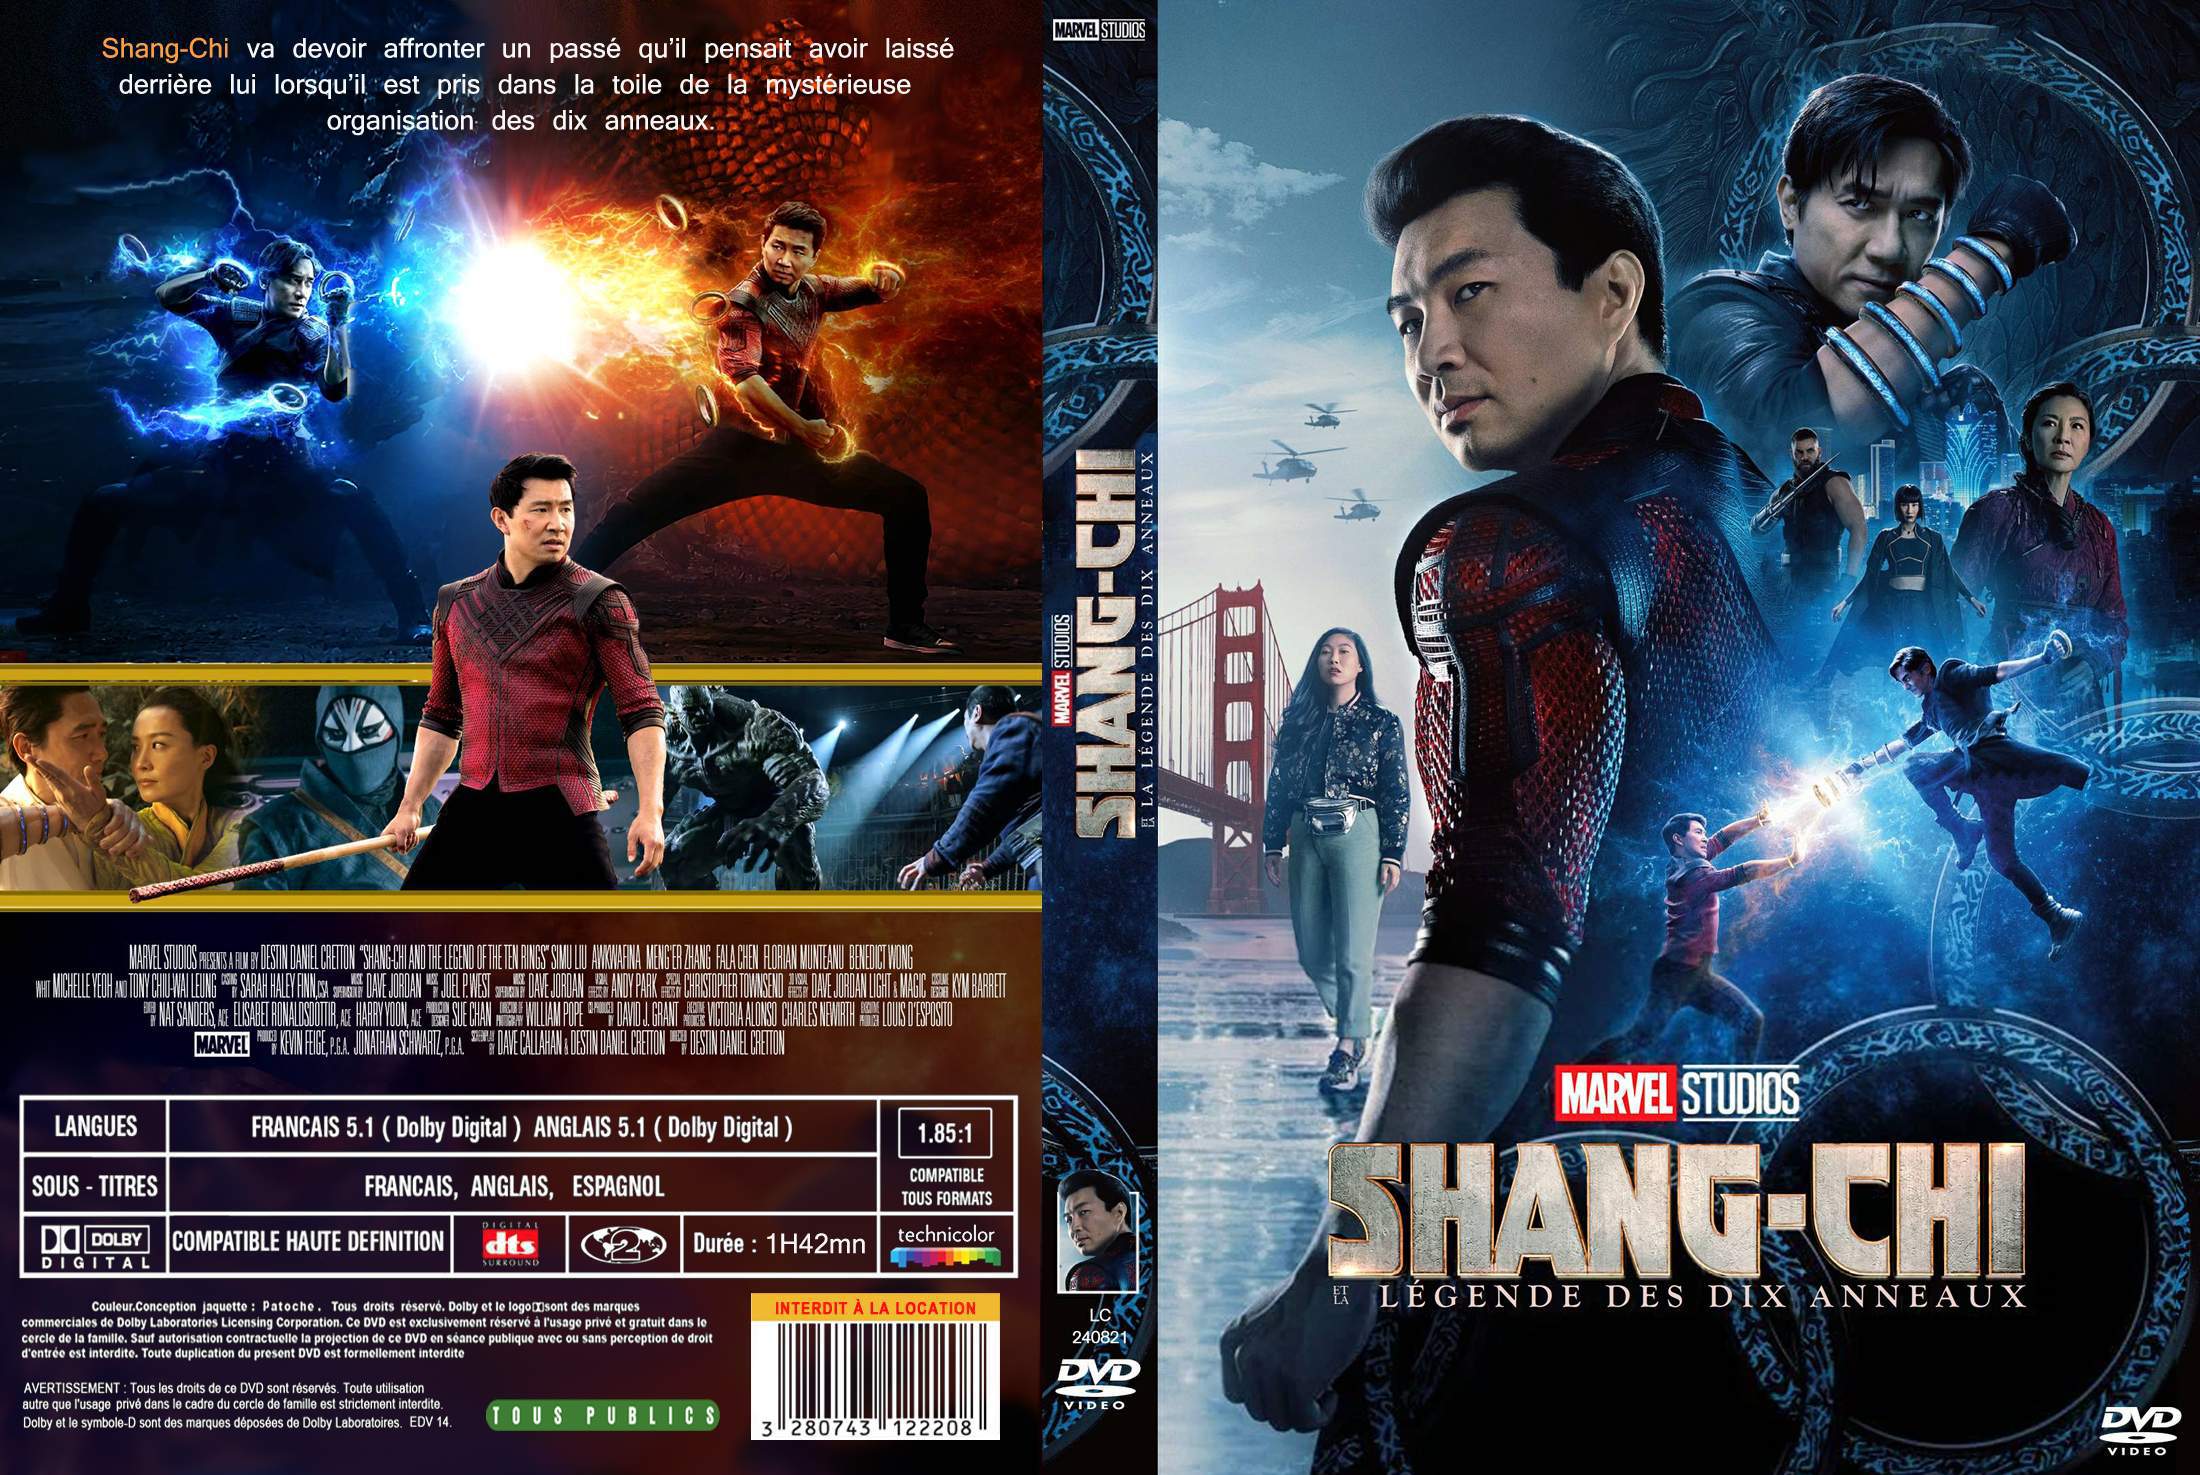 Jaquette DVD Shang-Chi custom